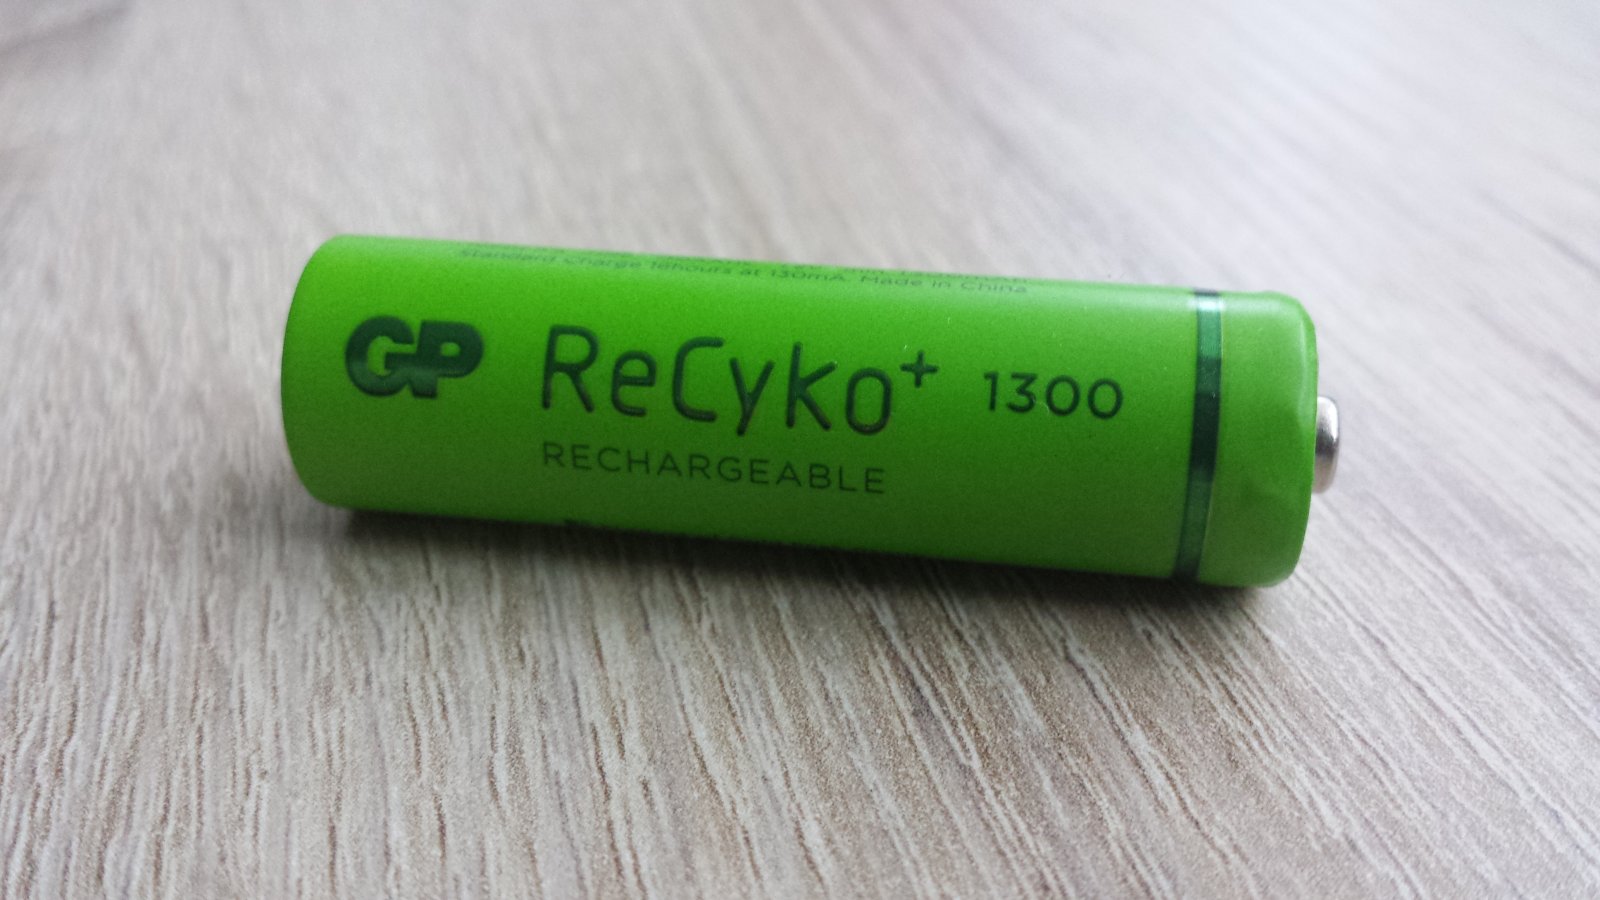 GP ReCyko+ 1300